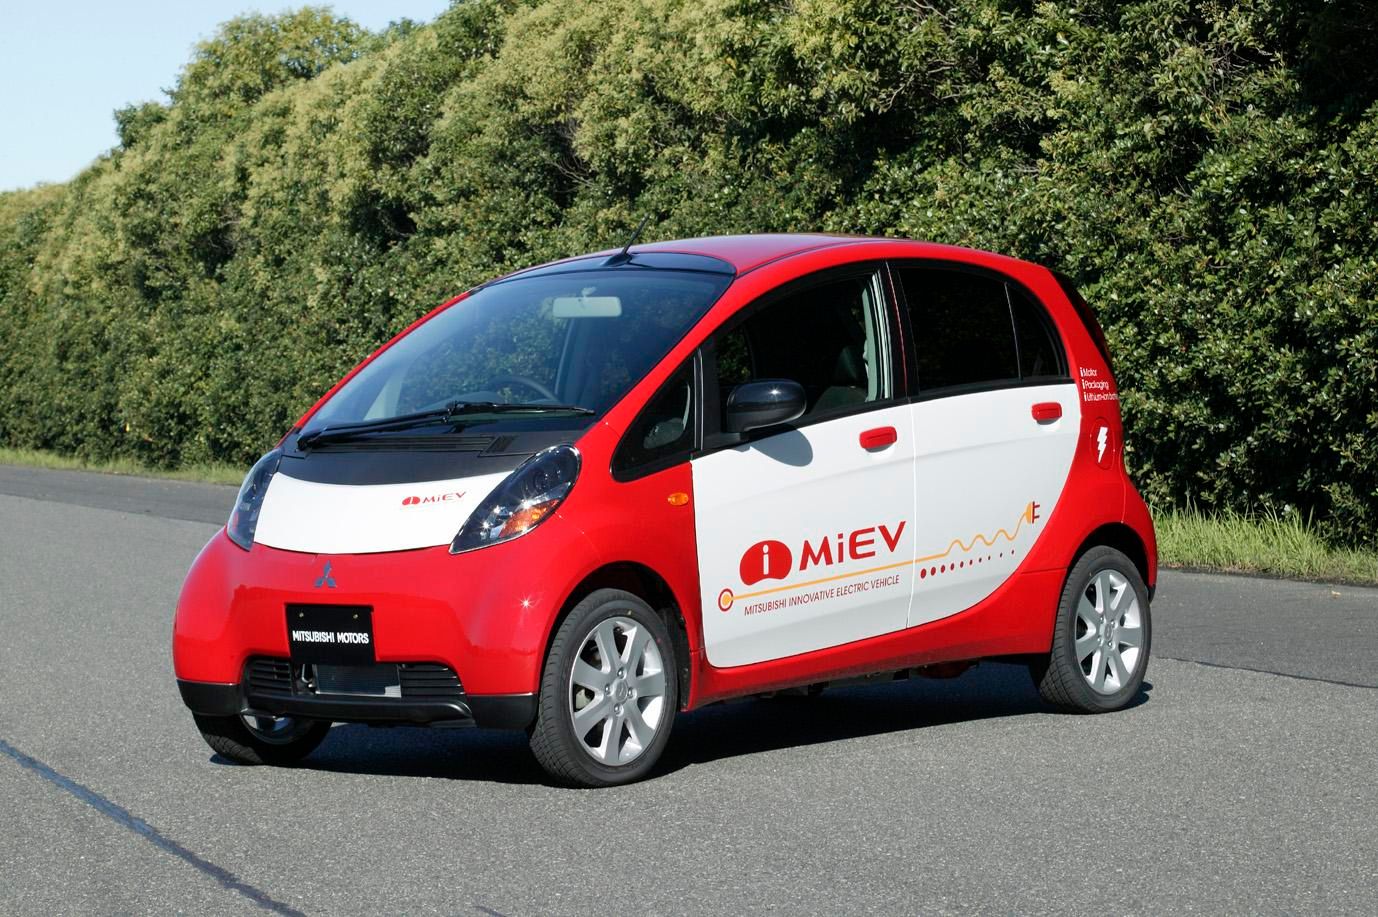 Mitsubishi innovative Electric Vehicle